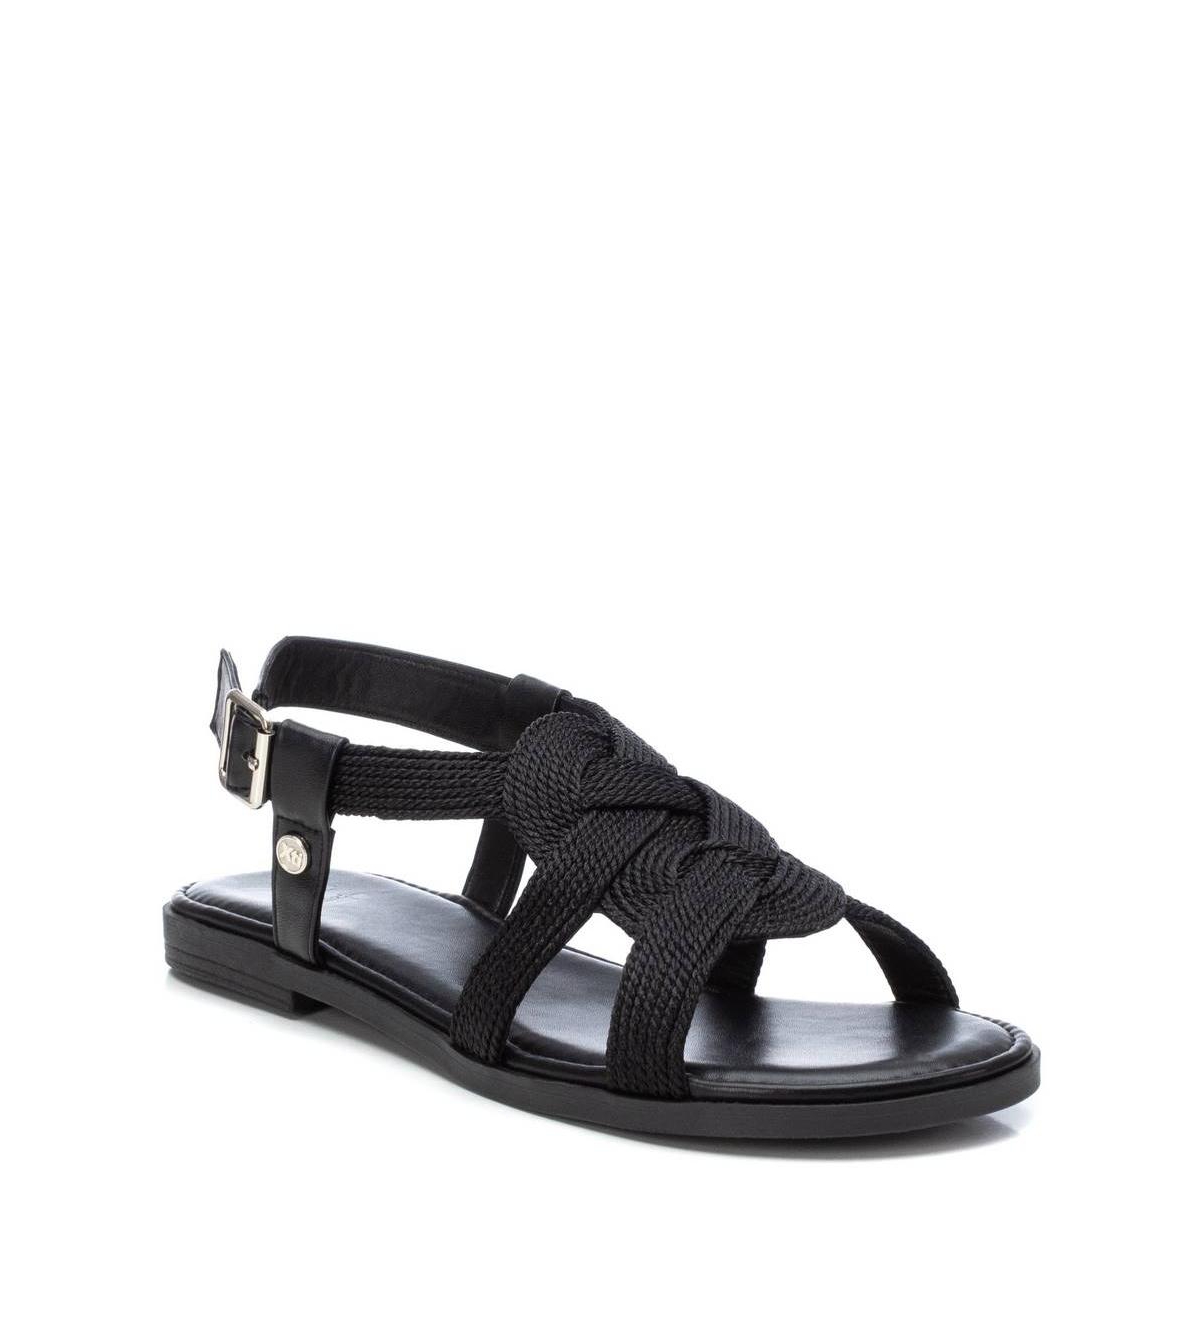 Women's Braided Flat Sandals By Xti, Black - Black